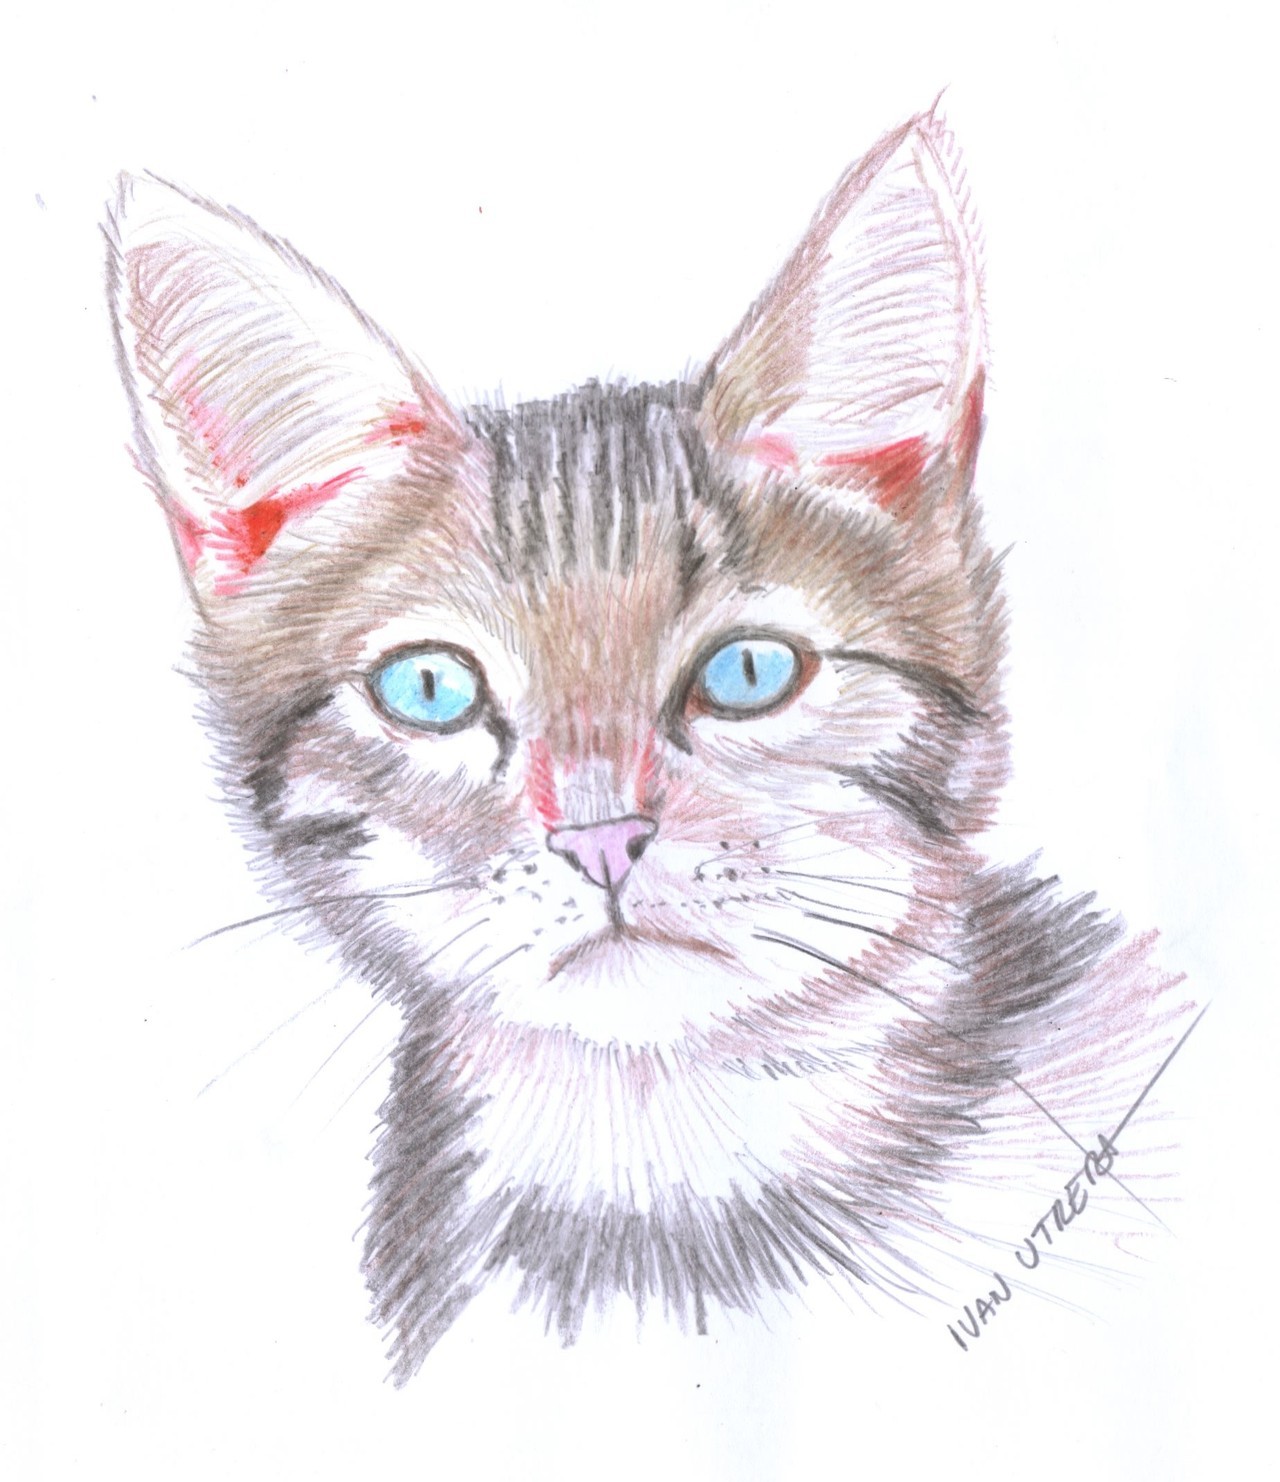 Ivan Utrera (gato en lapices de colores)